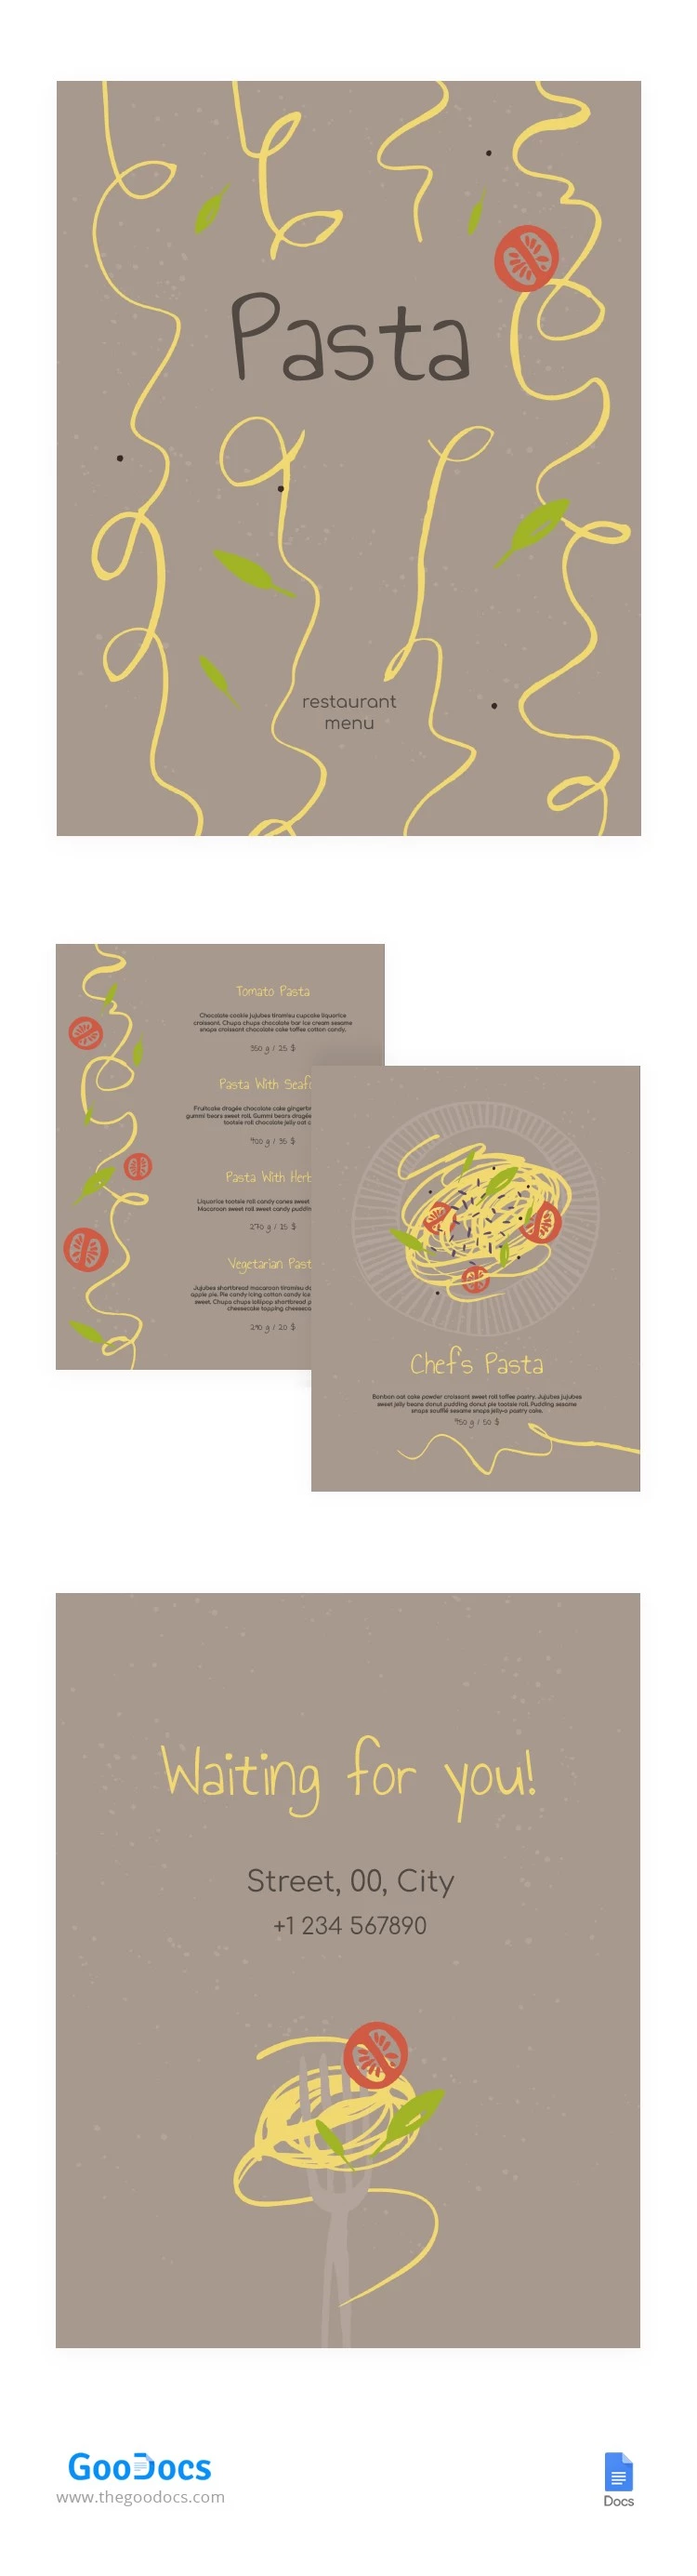 Pasta Restaurant Speisekarte - free Google Docs Template - 10064020